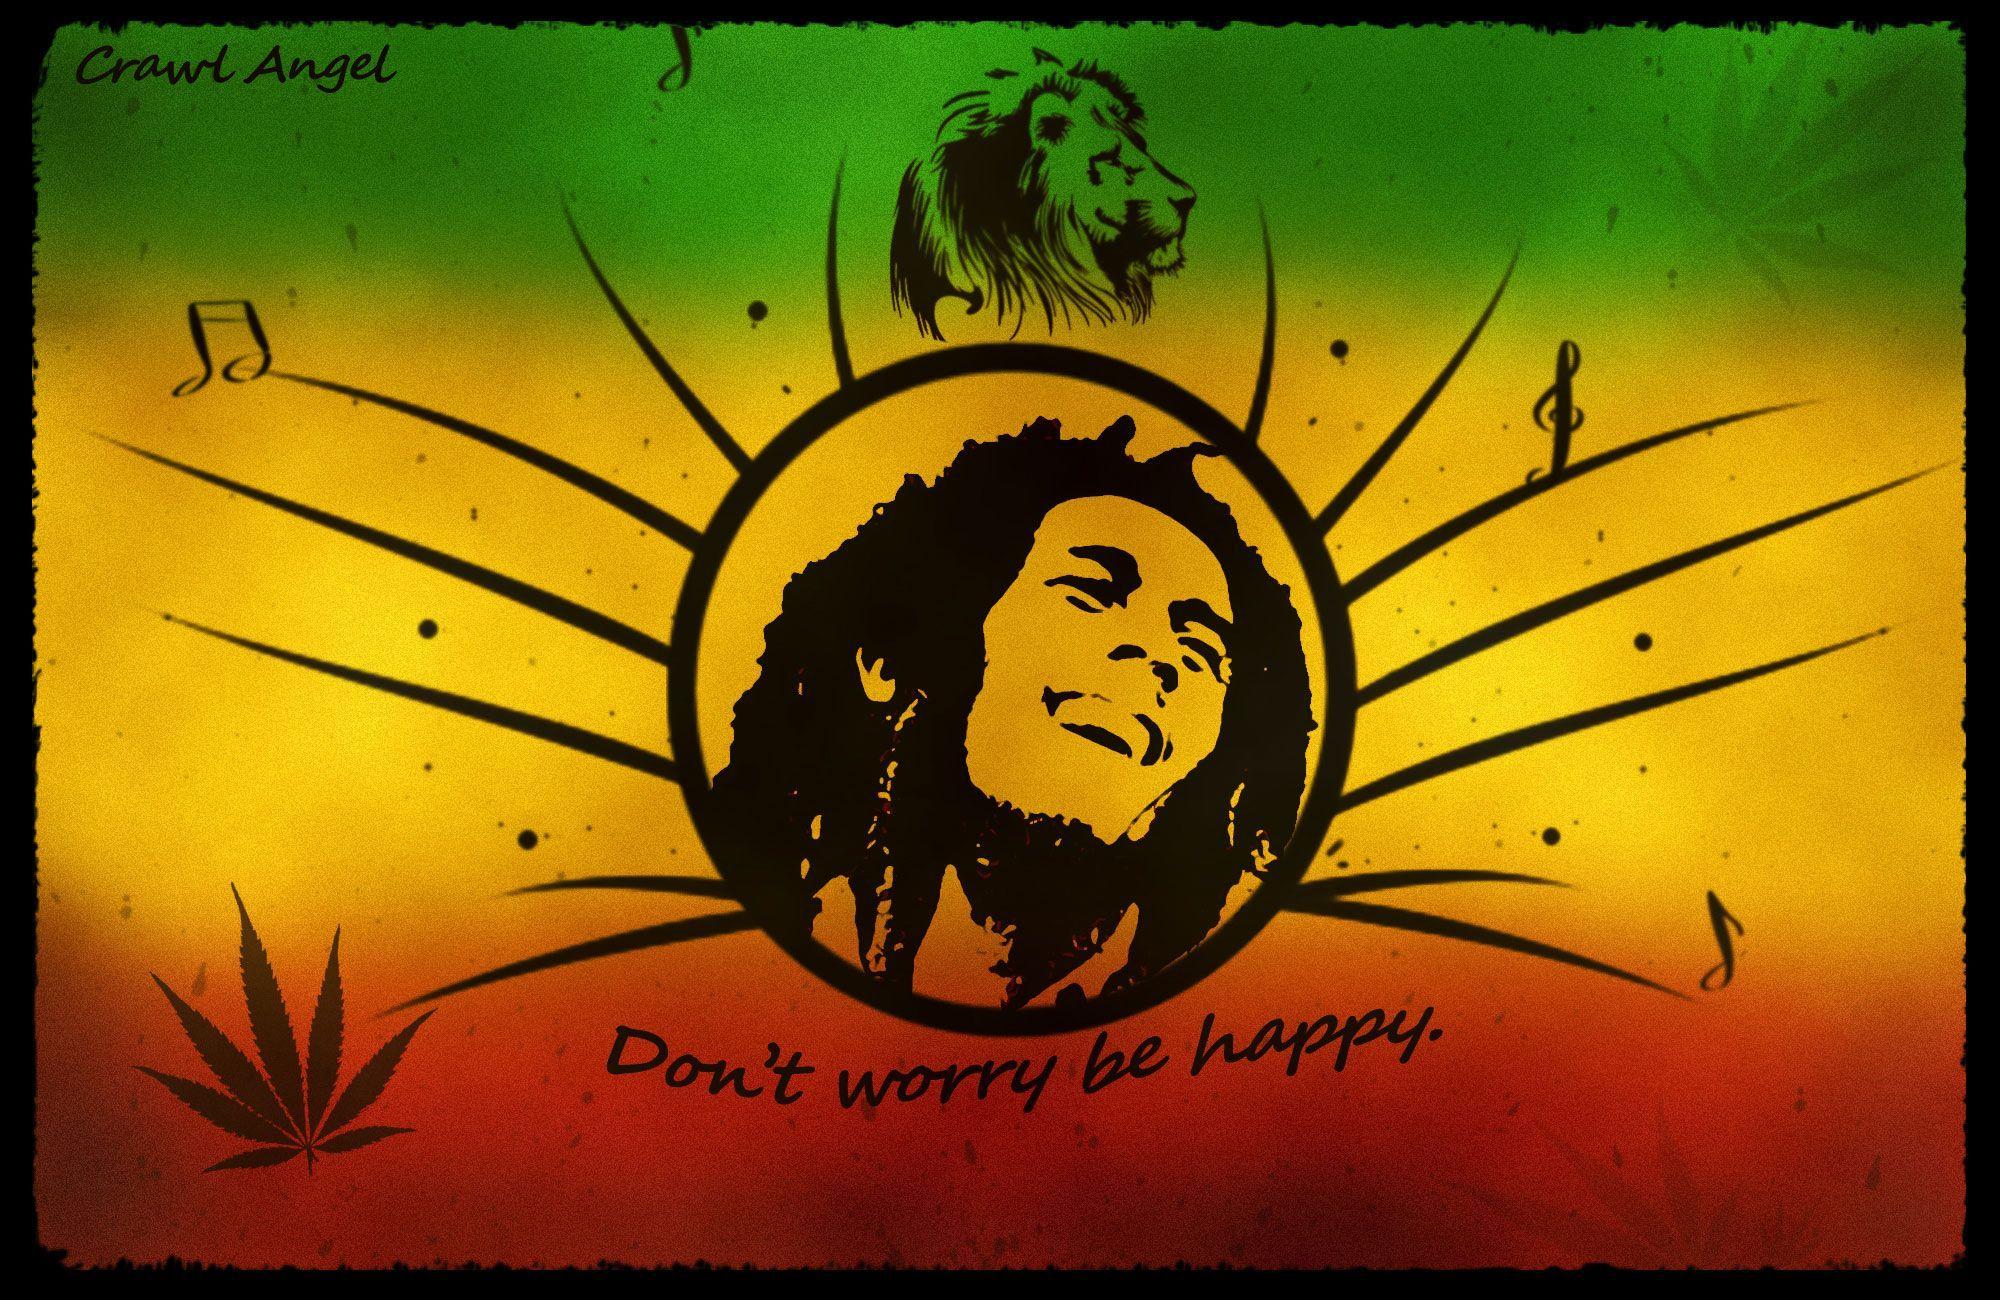 Bob Marley Wallpaper High Resolution and Quality Download. Bob